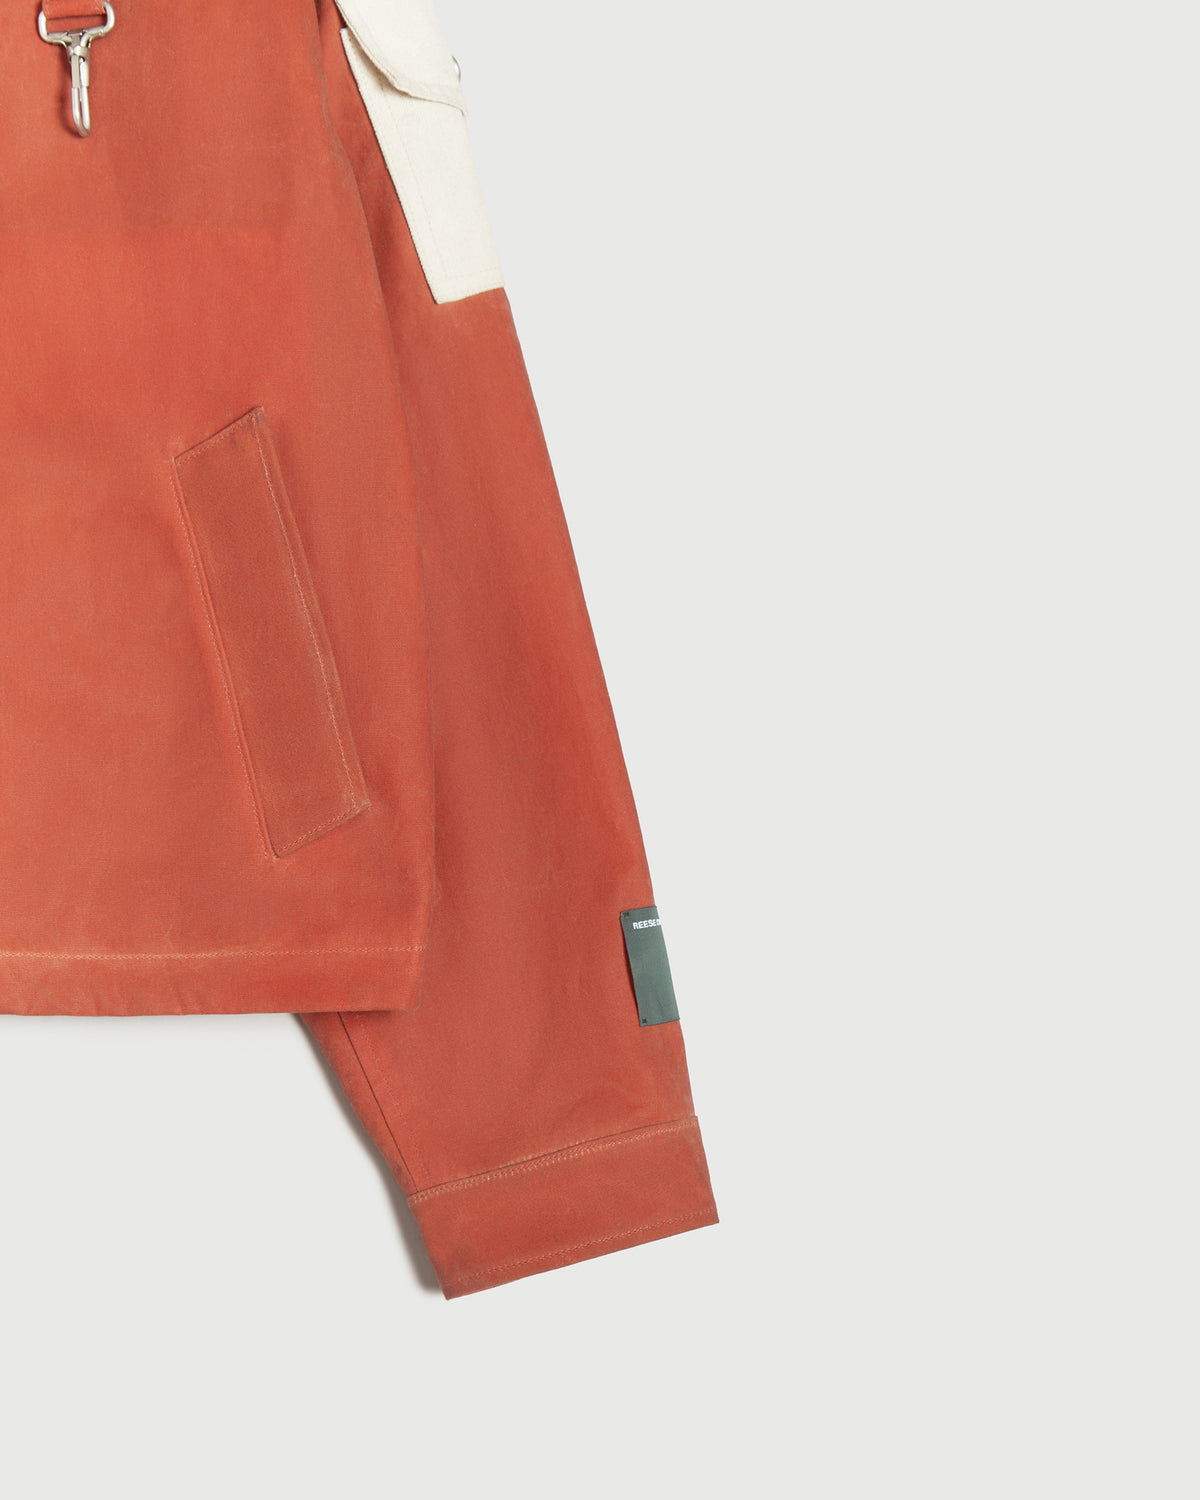 RCI Reserve: Work Jacket in Orange Waxed Canvas